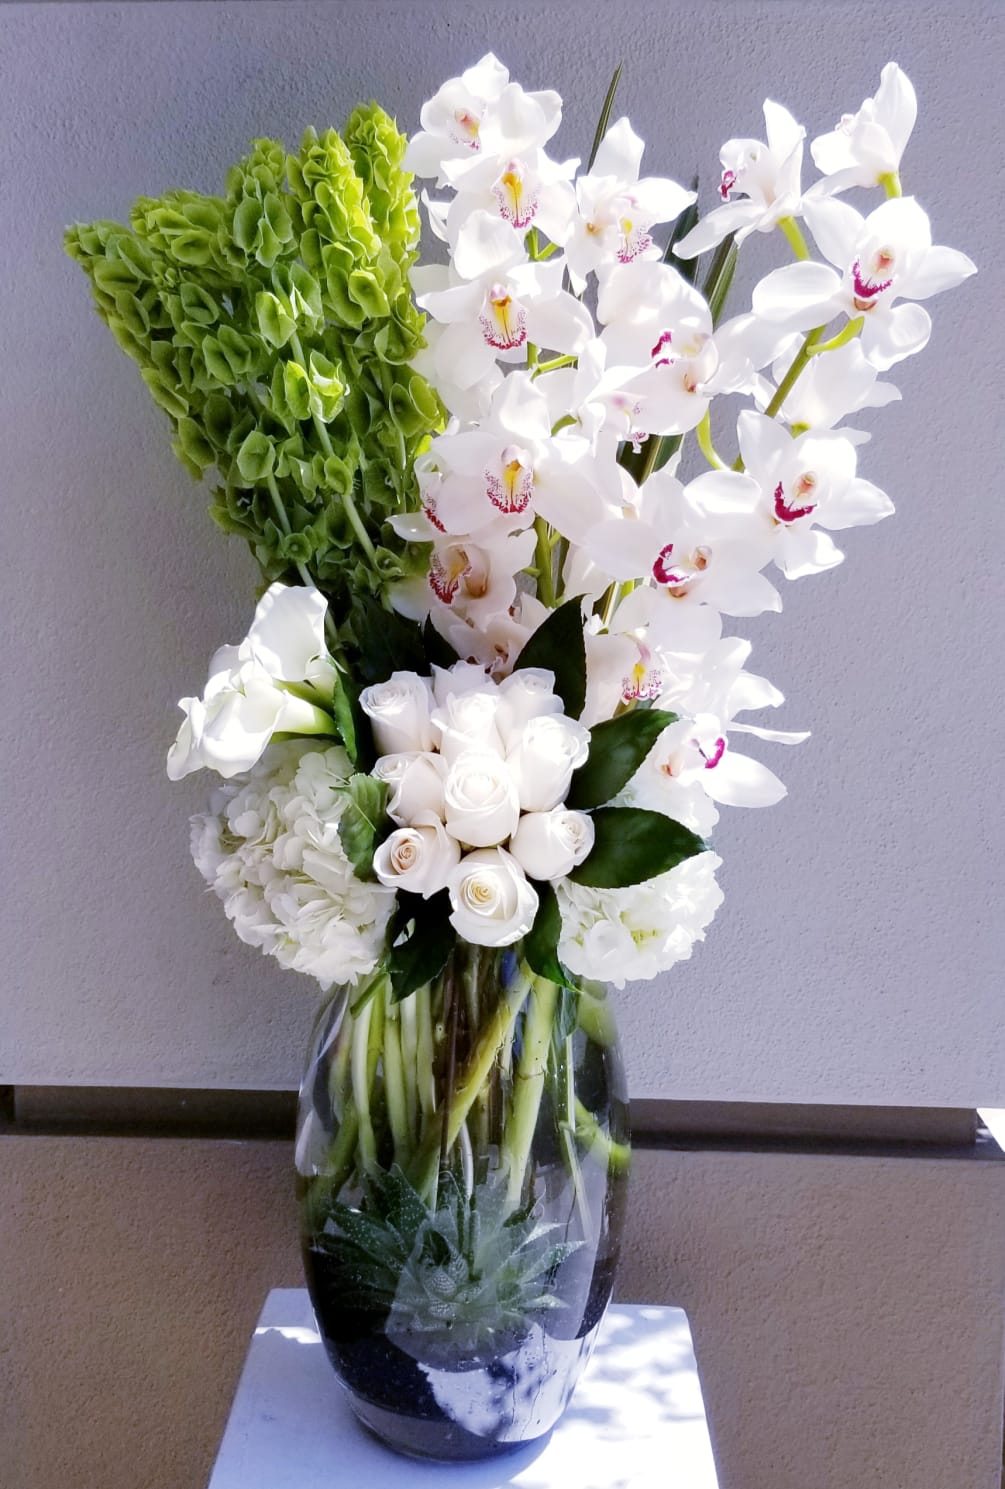 Tall arrangement composed of white cymbidium orchids, bells of Ireland, roses, hydrangeas